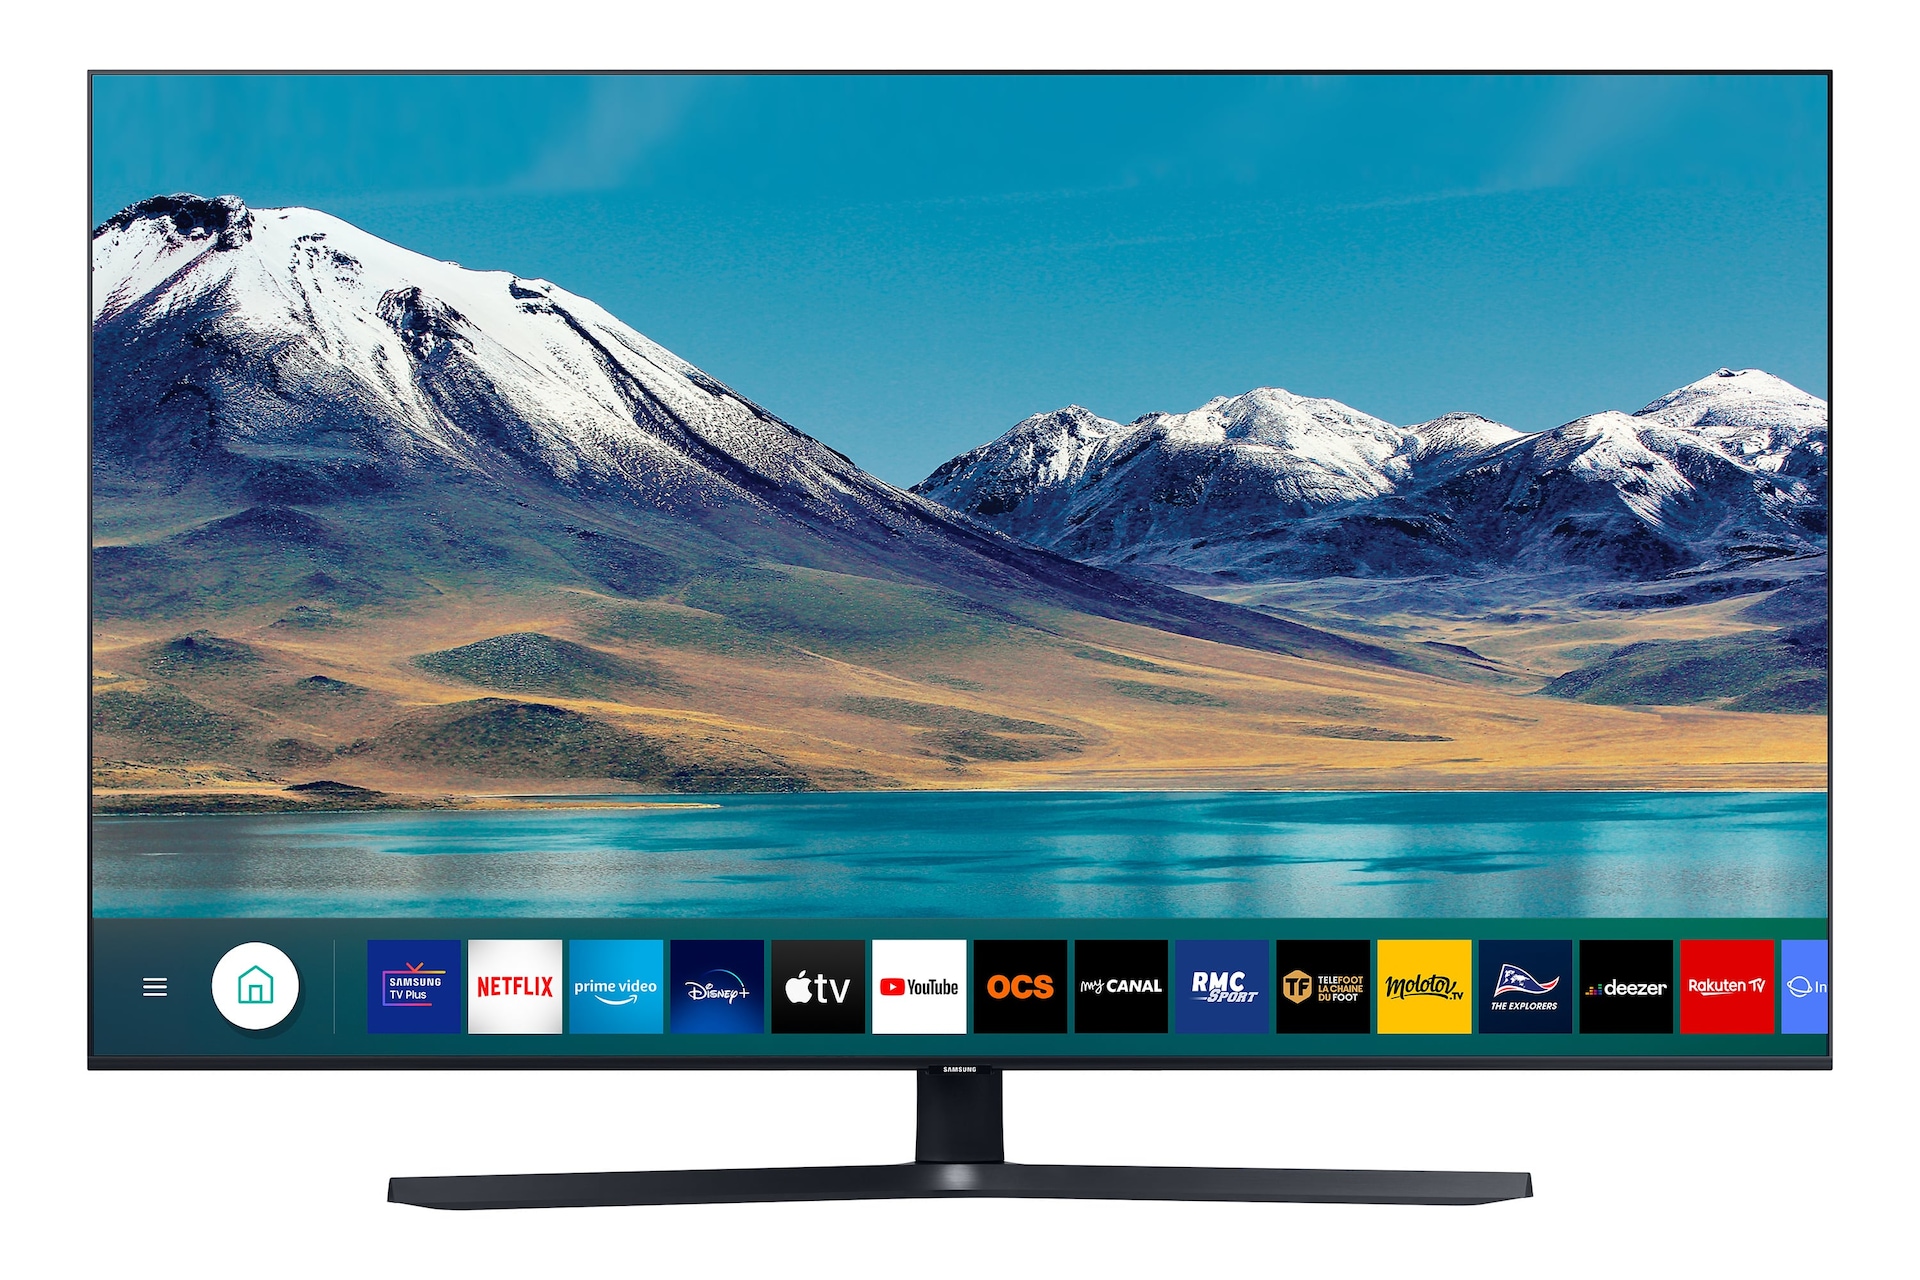 Samsung TV Crystal UHD 50TU8505, Image, Achat, prix, avis